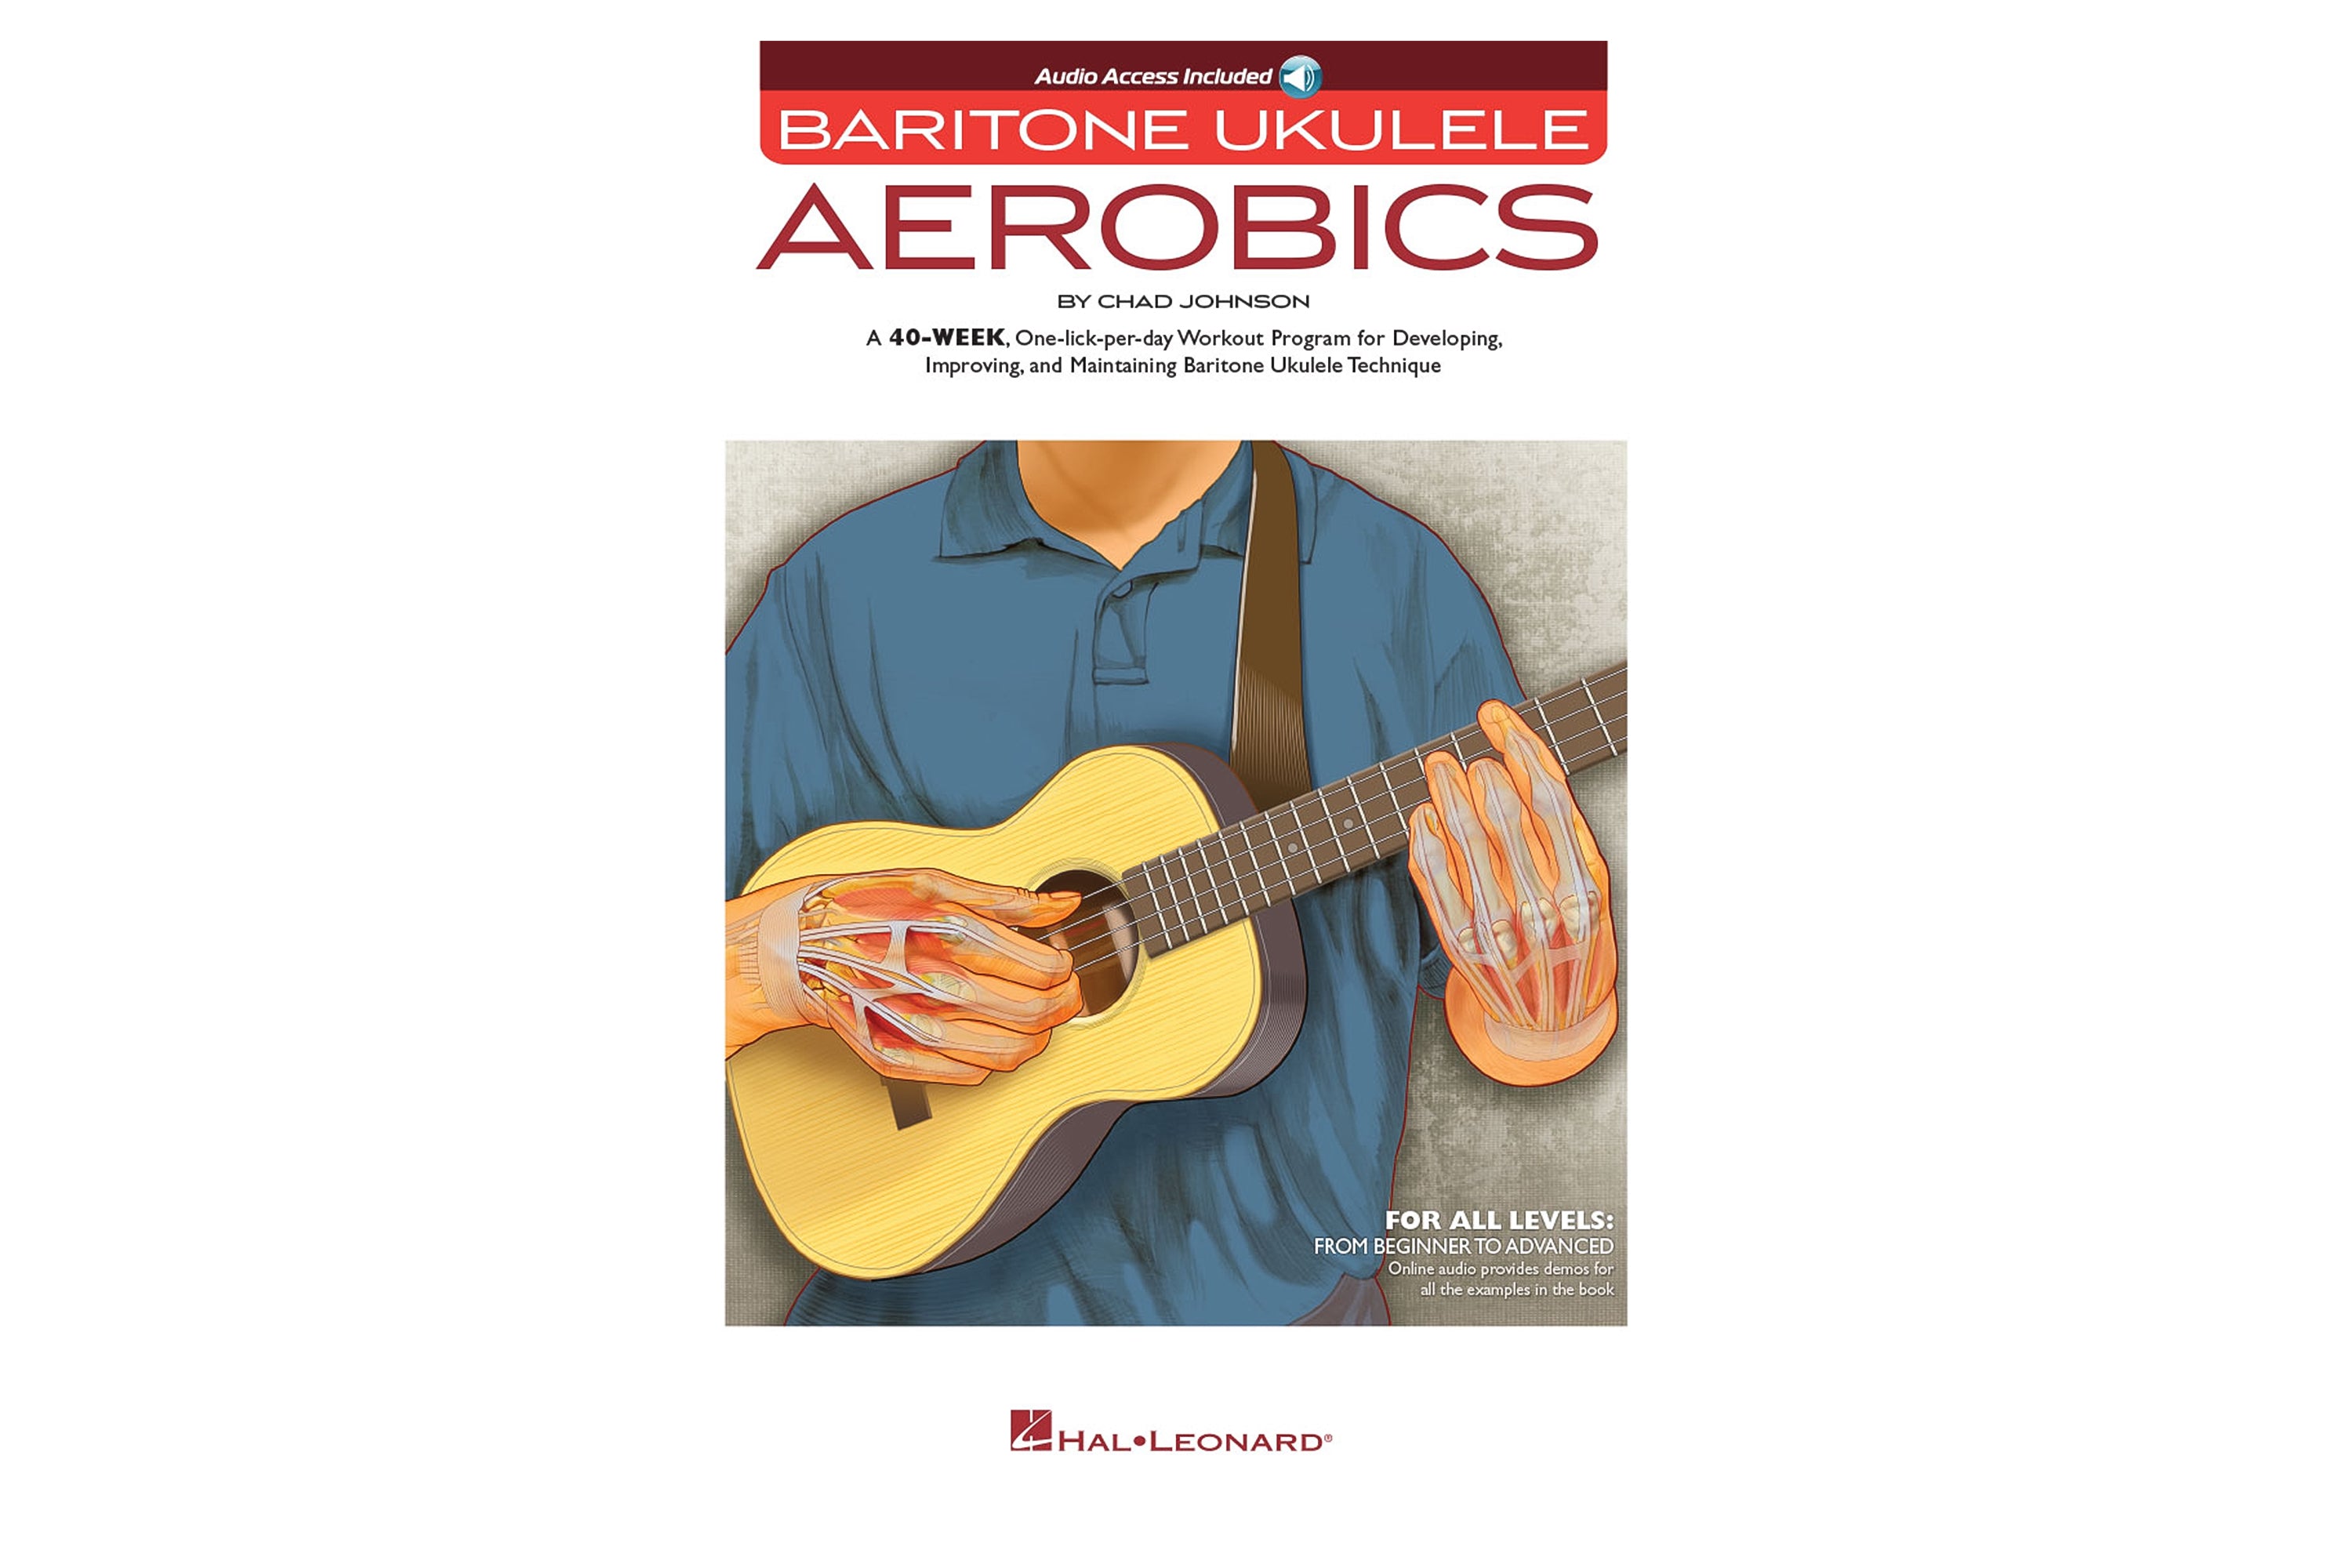 Baritone Ukulele Aerobics For All Levels, from Beginner to Advanced